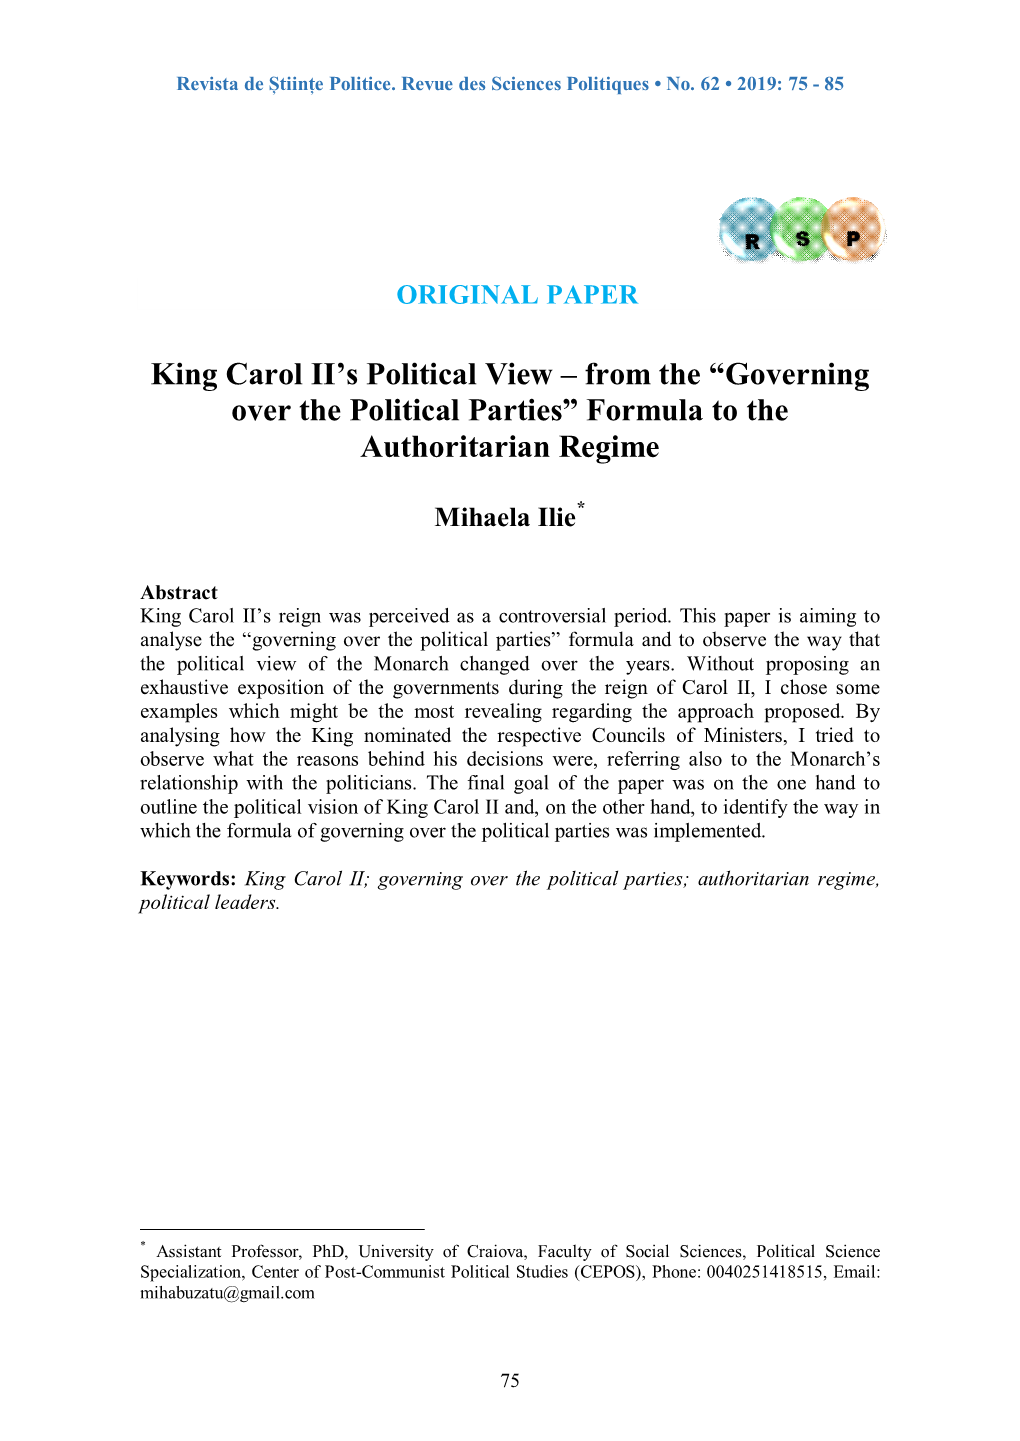 King Carol II's Political View